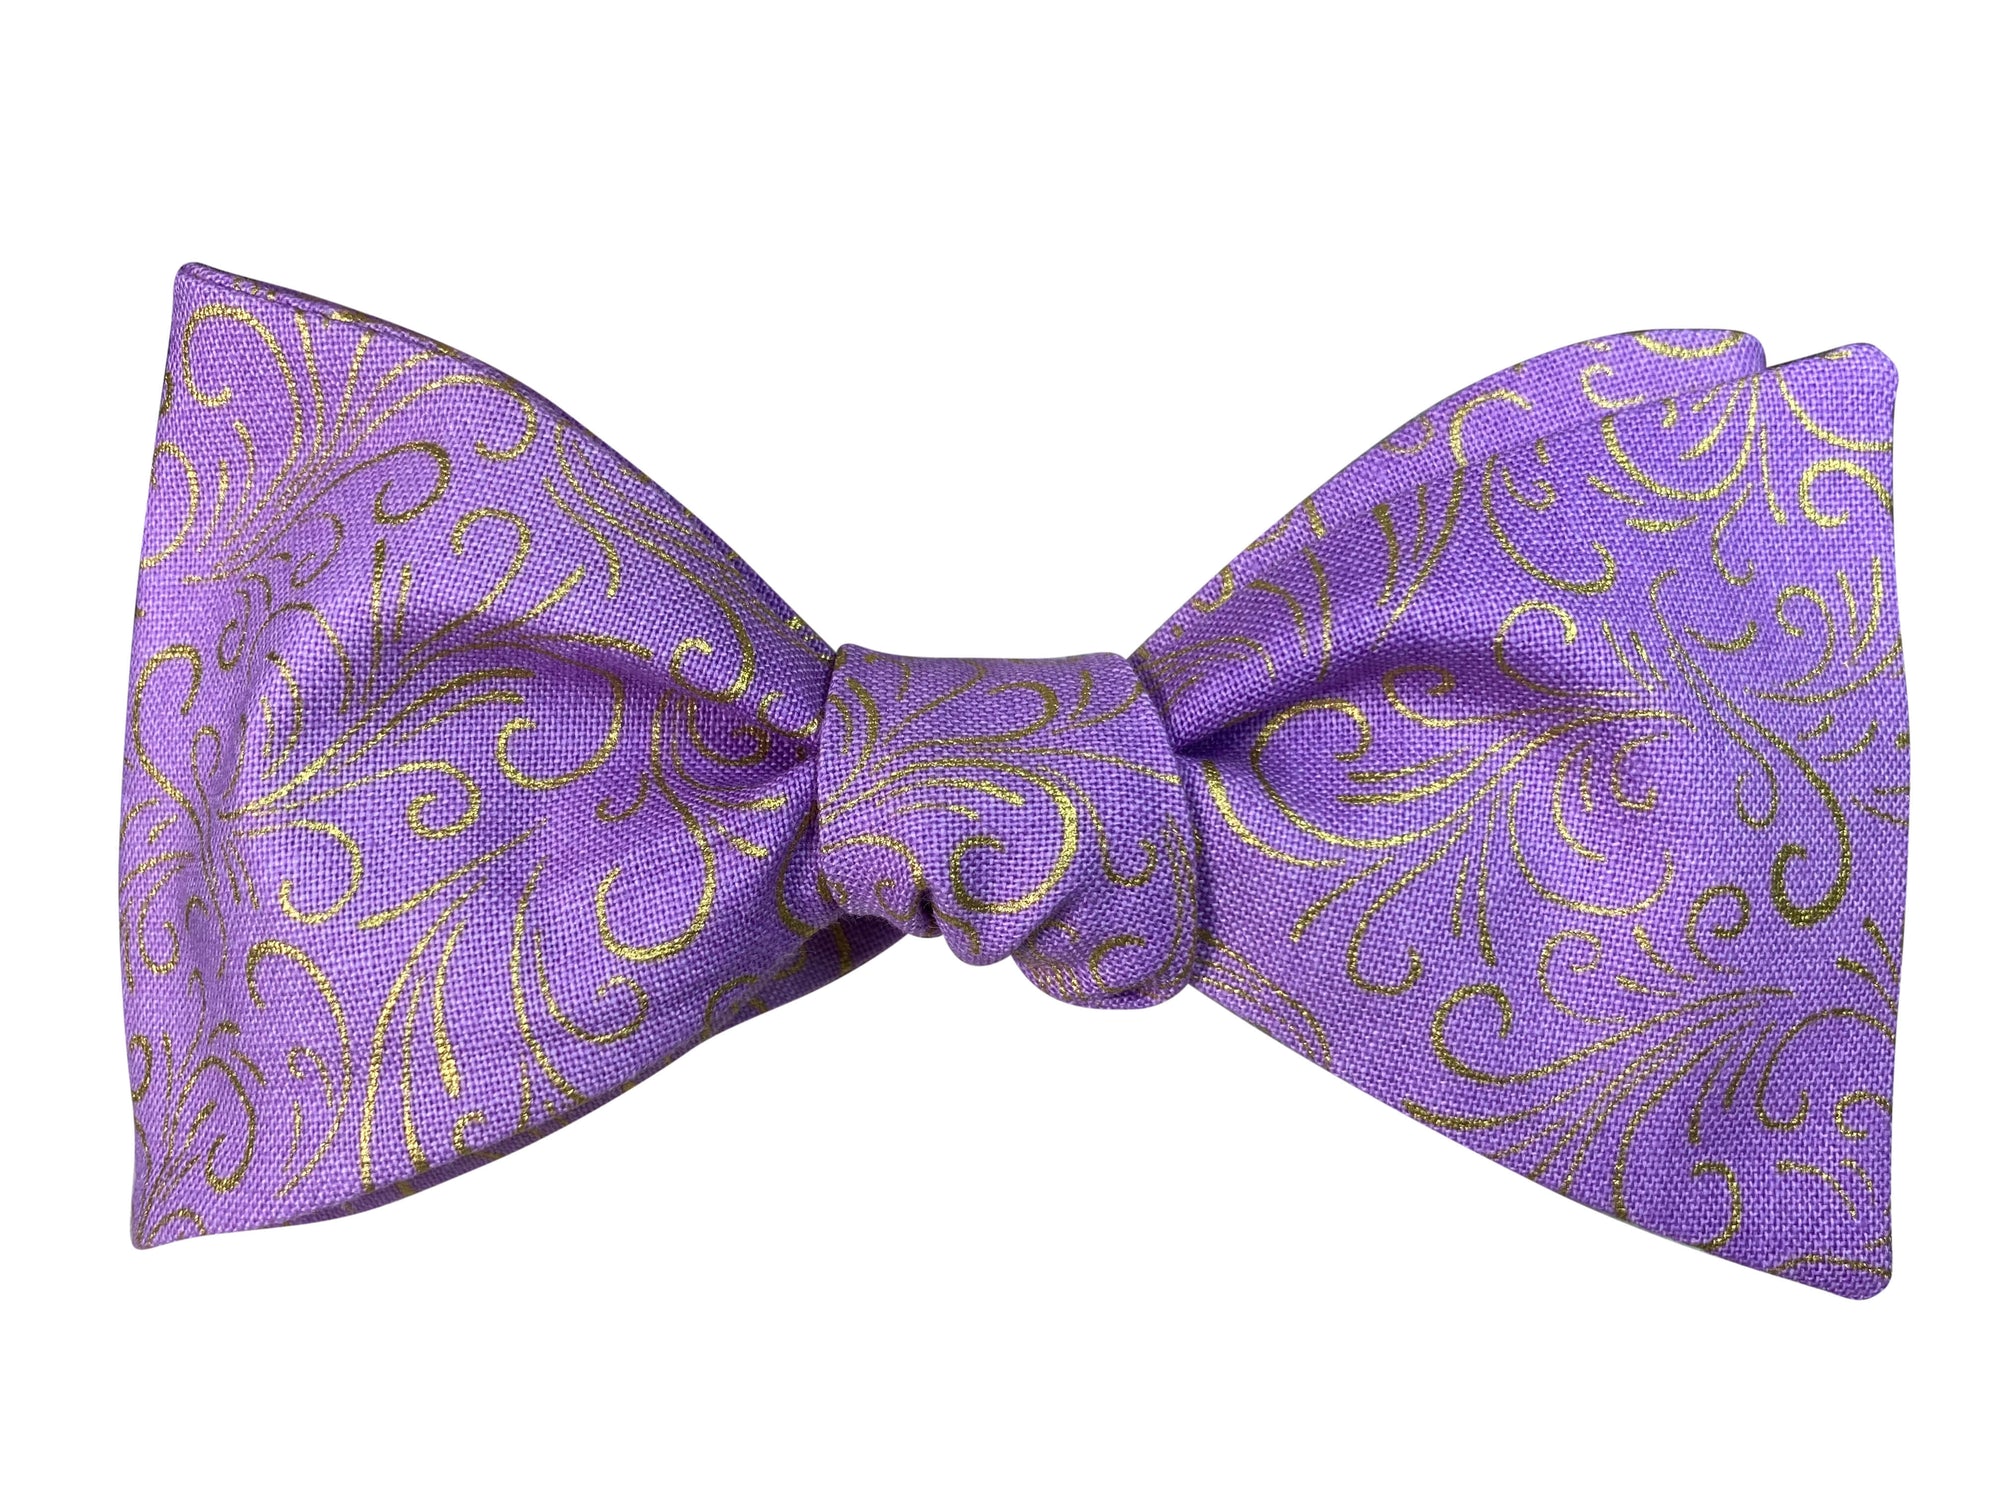 Lilac and gold filigree bridgerton style self tie bow tie